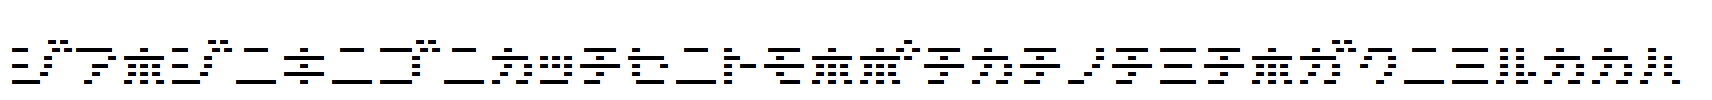 D3-DigiBitMapism-Katakana-Thin.ttf